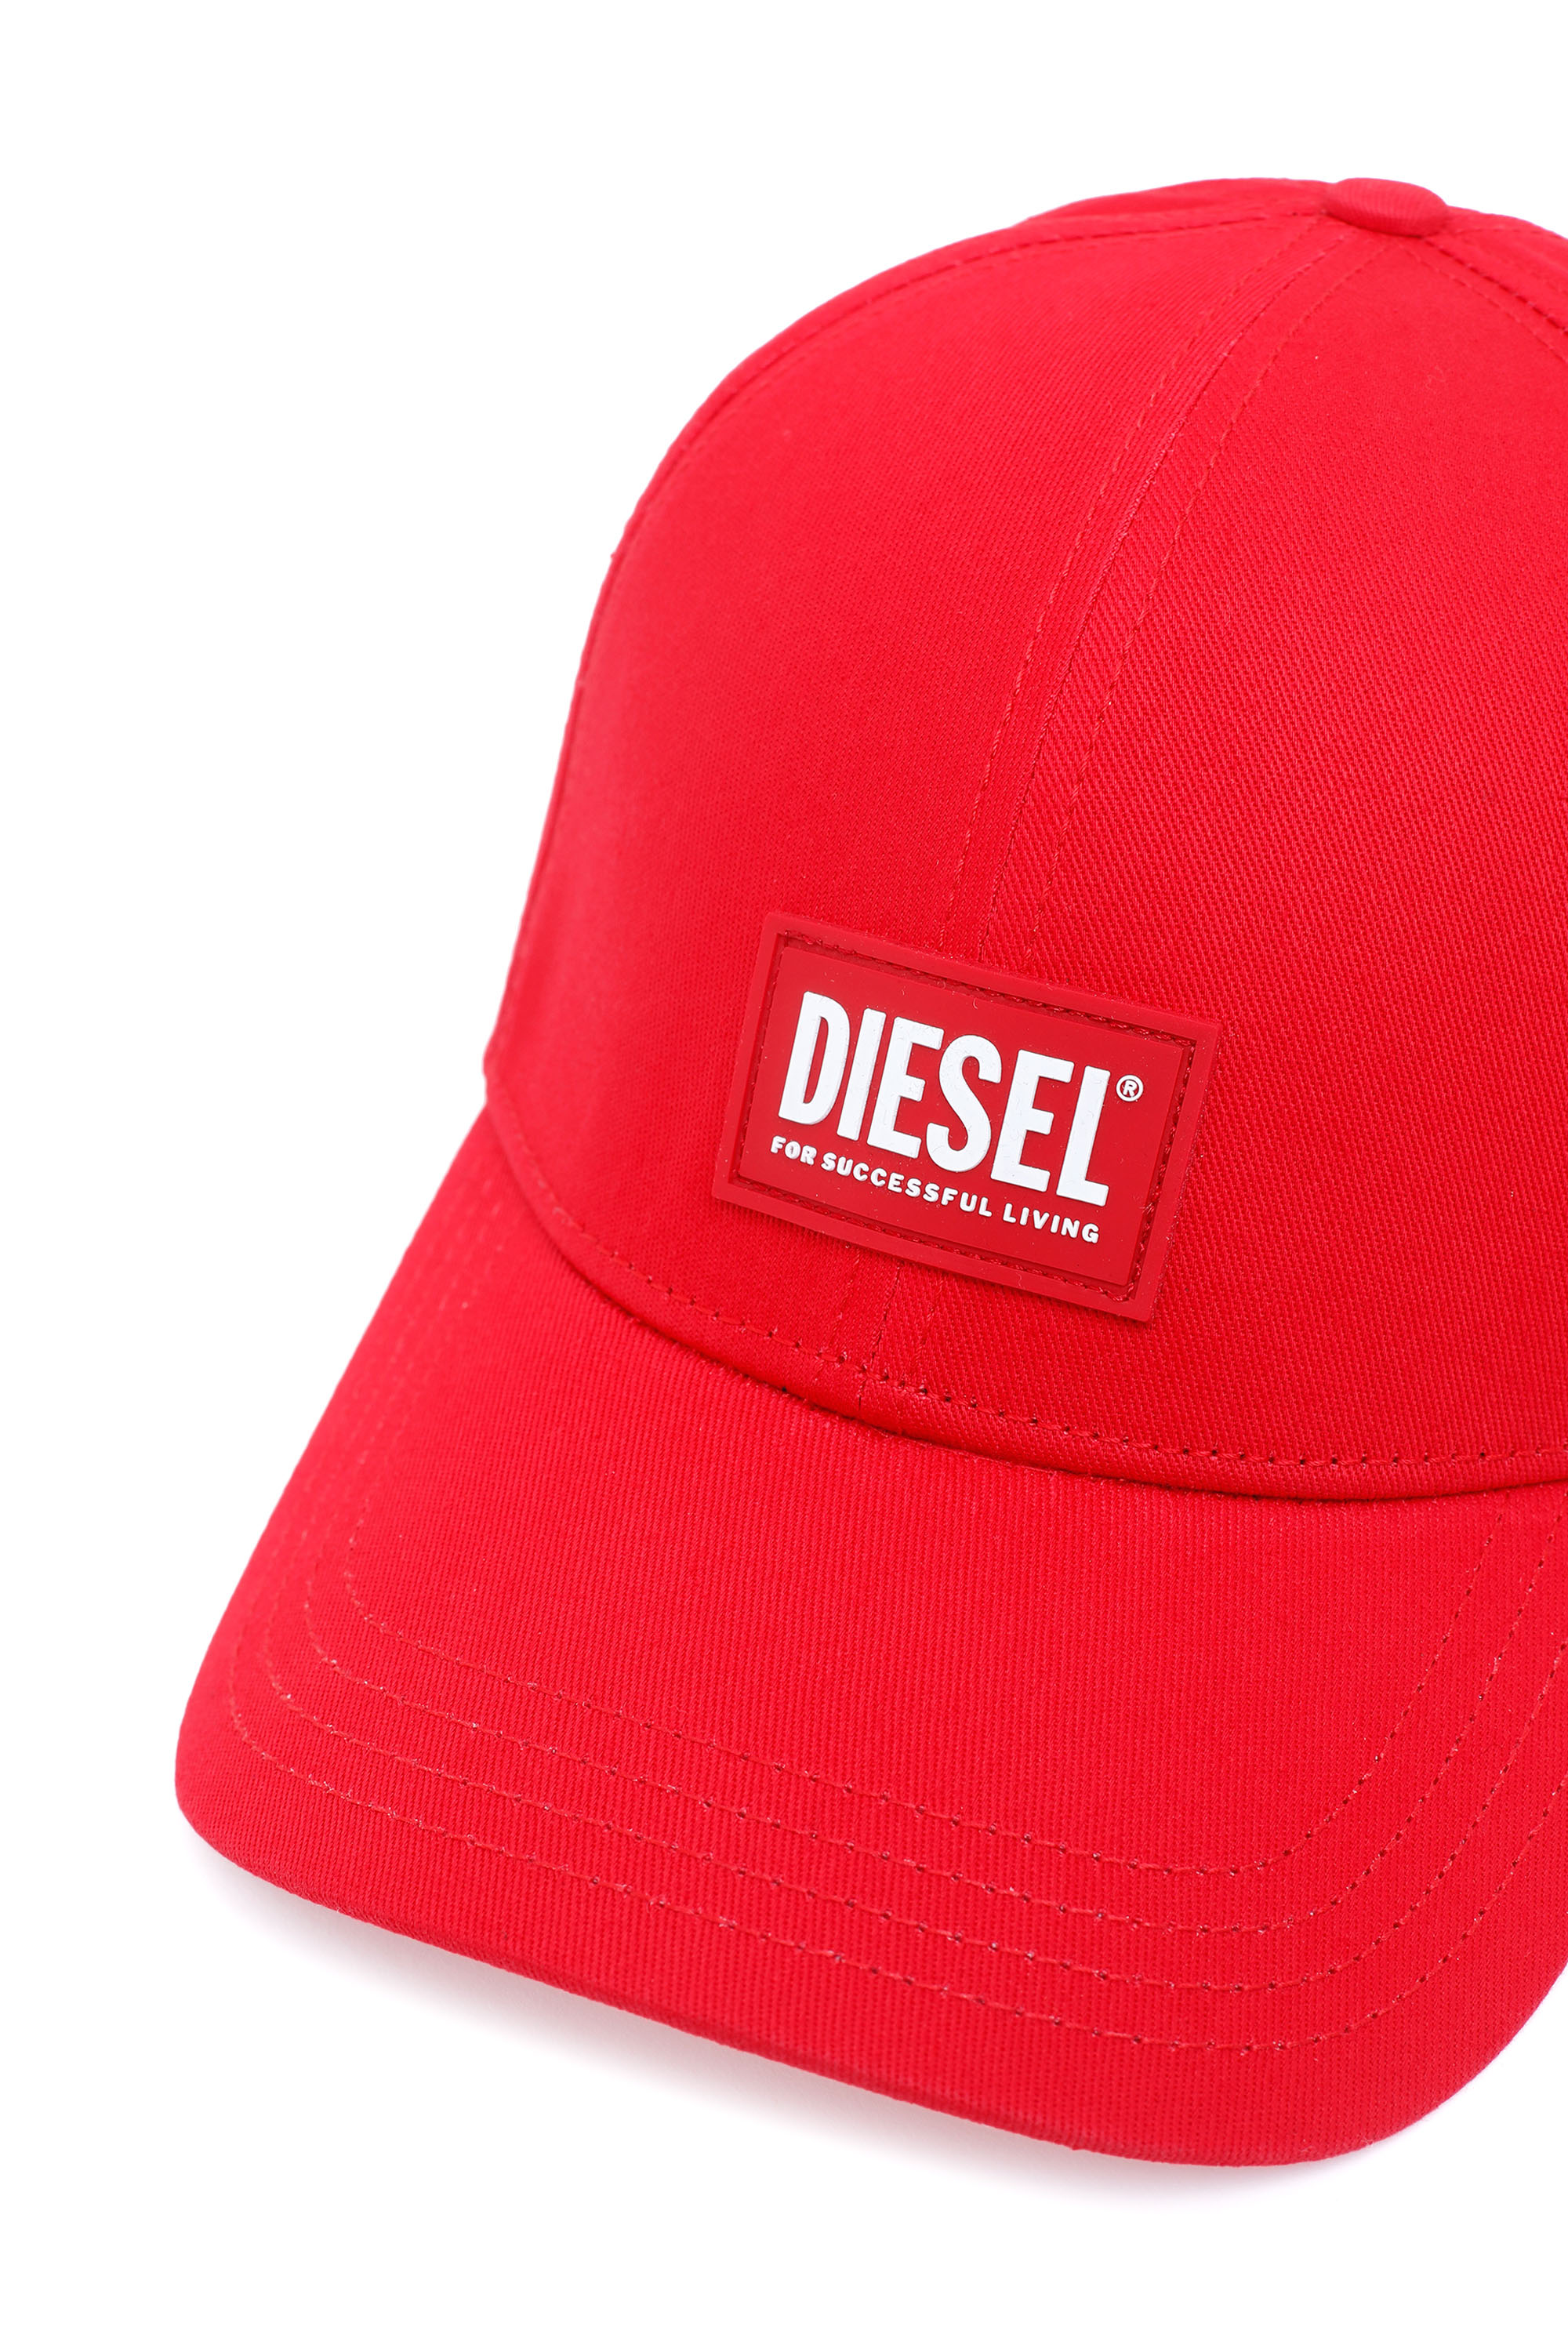 Diesel - CORRY-GUM, Red - Image 3